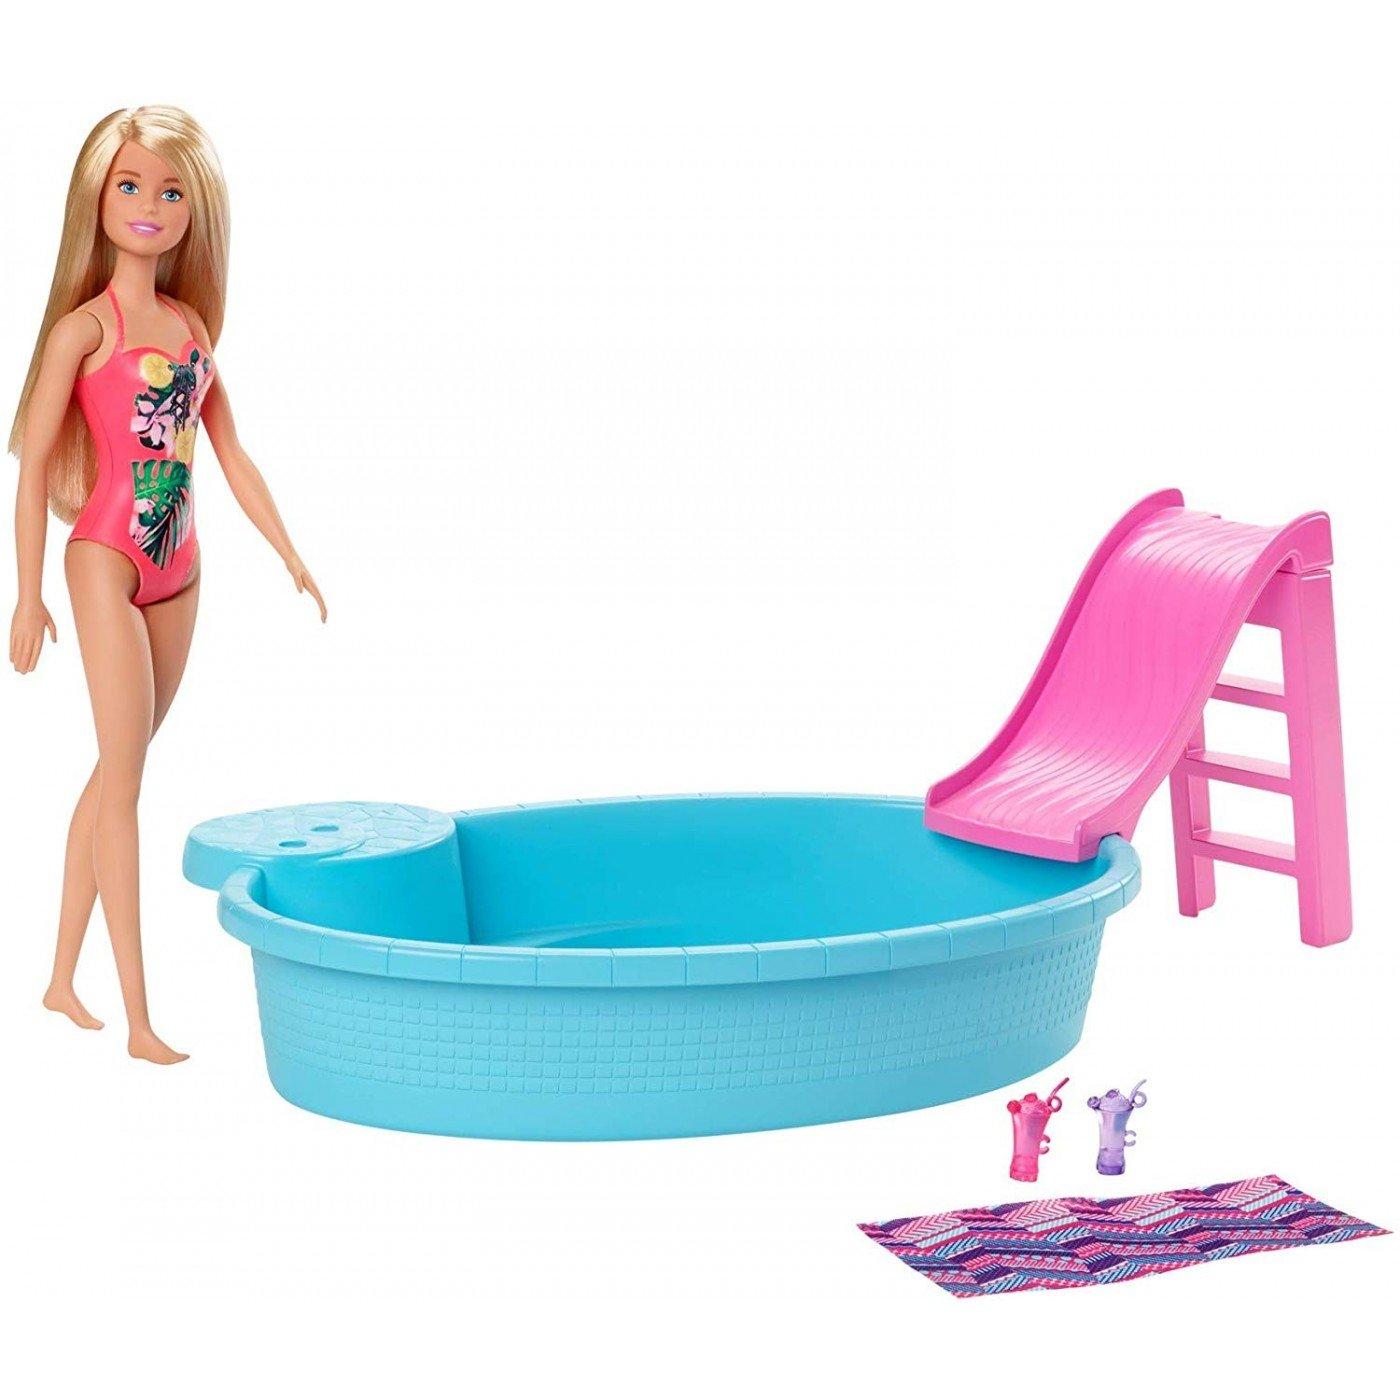 Selected image for MATTEL Set Barbie lutka sa bazenom